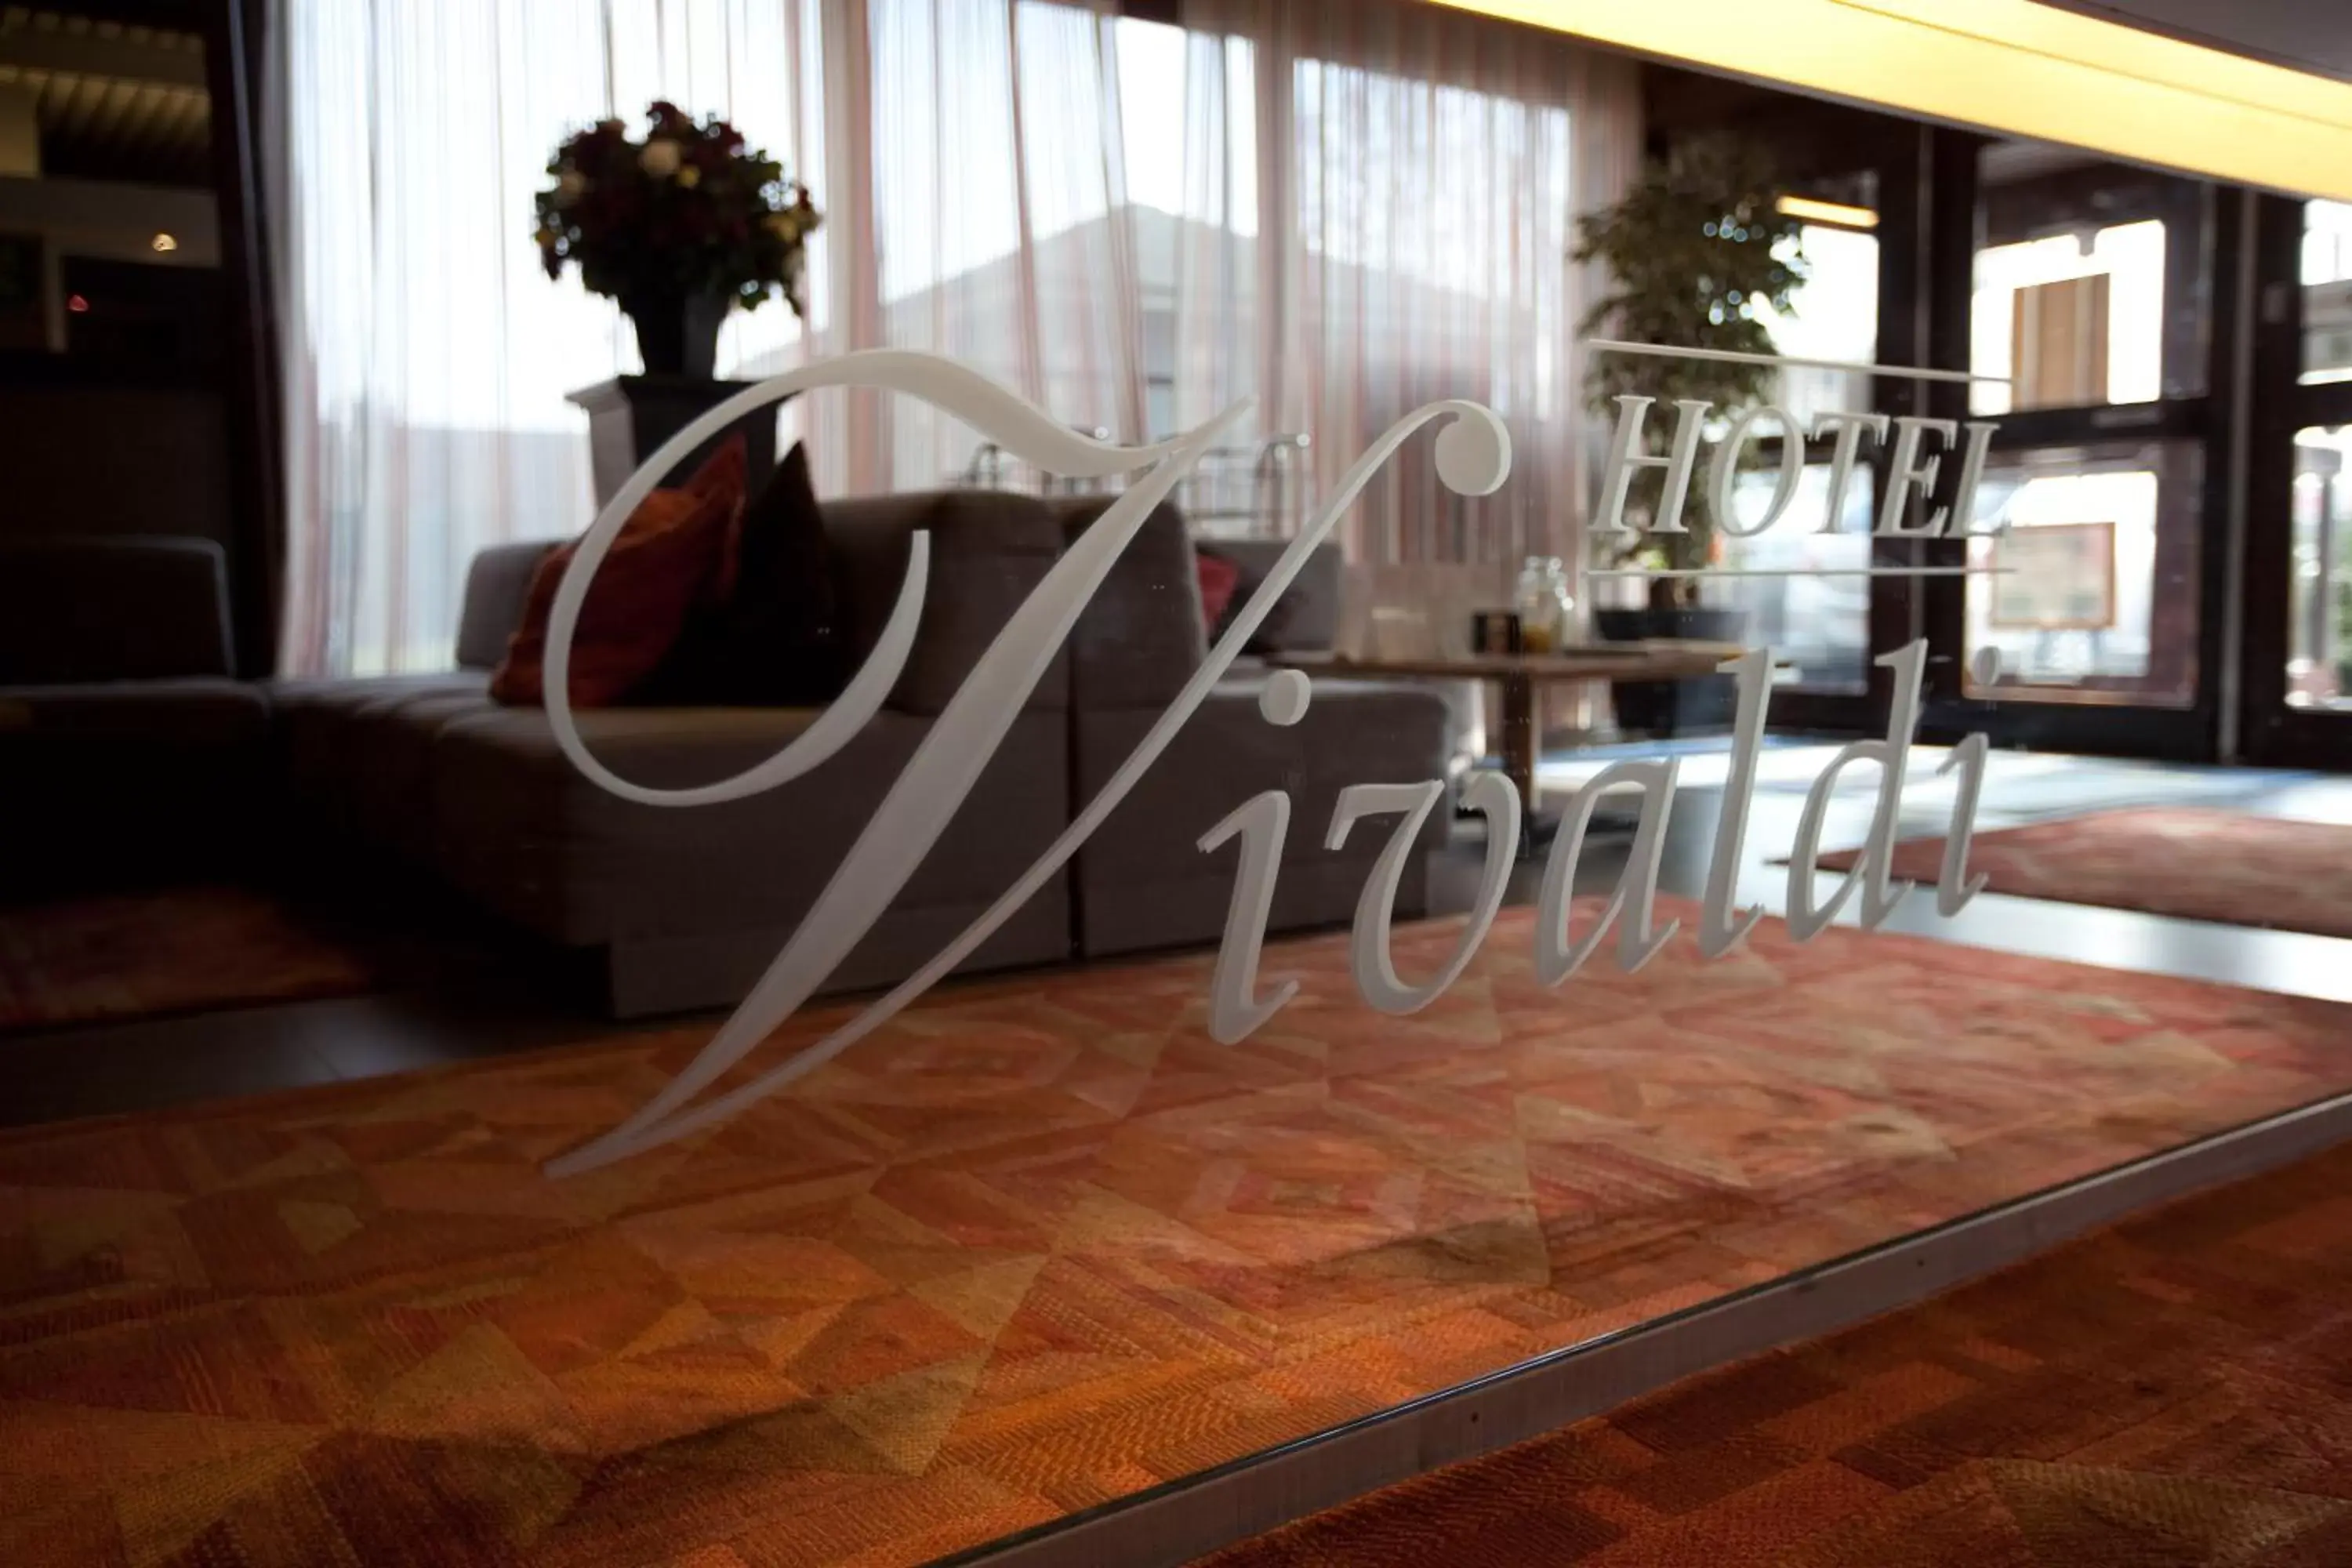 Decorative detail, Seating Area in Vivaldi Hotel